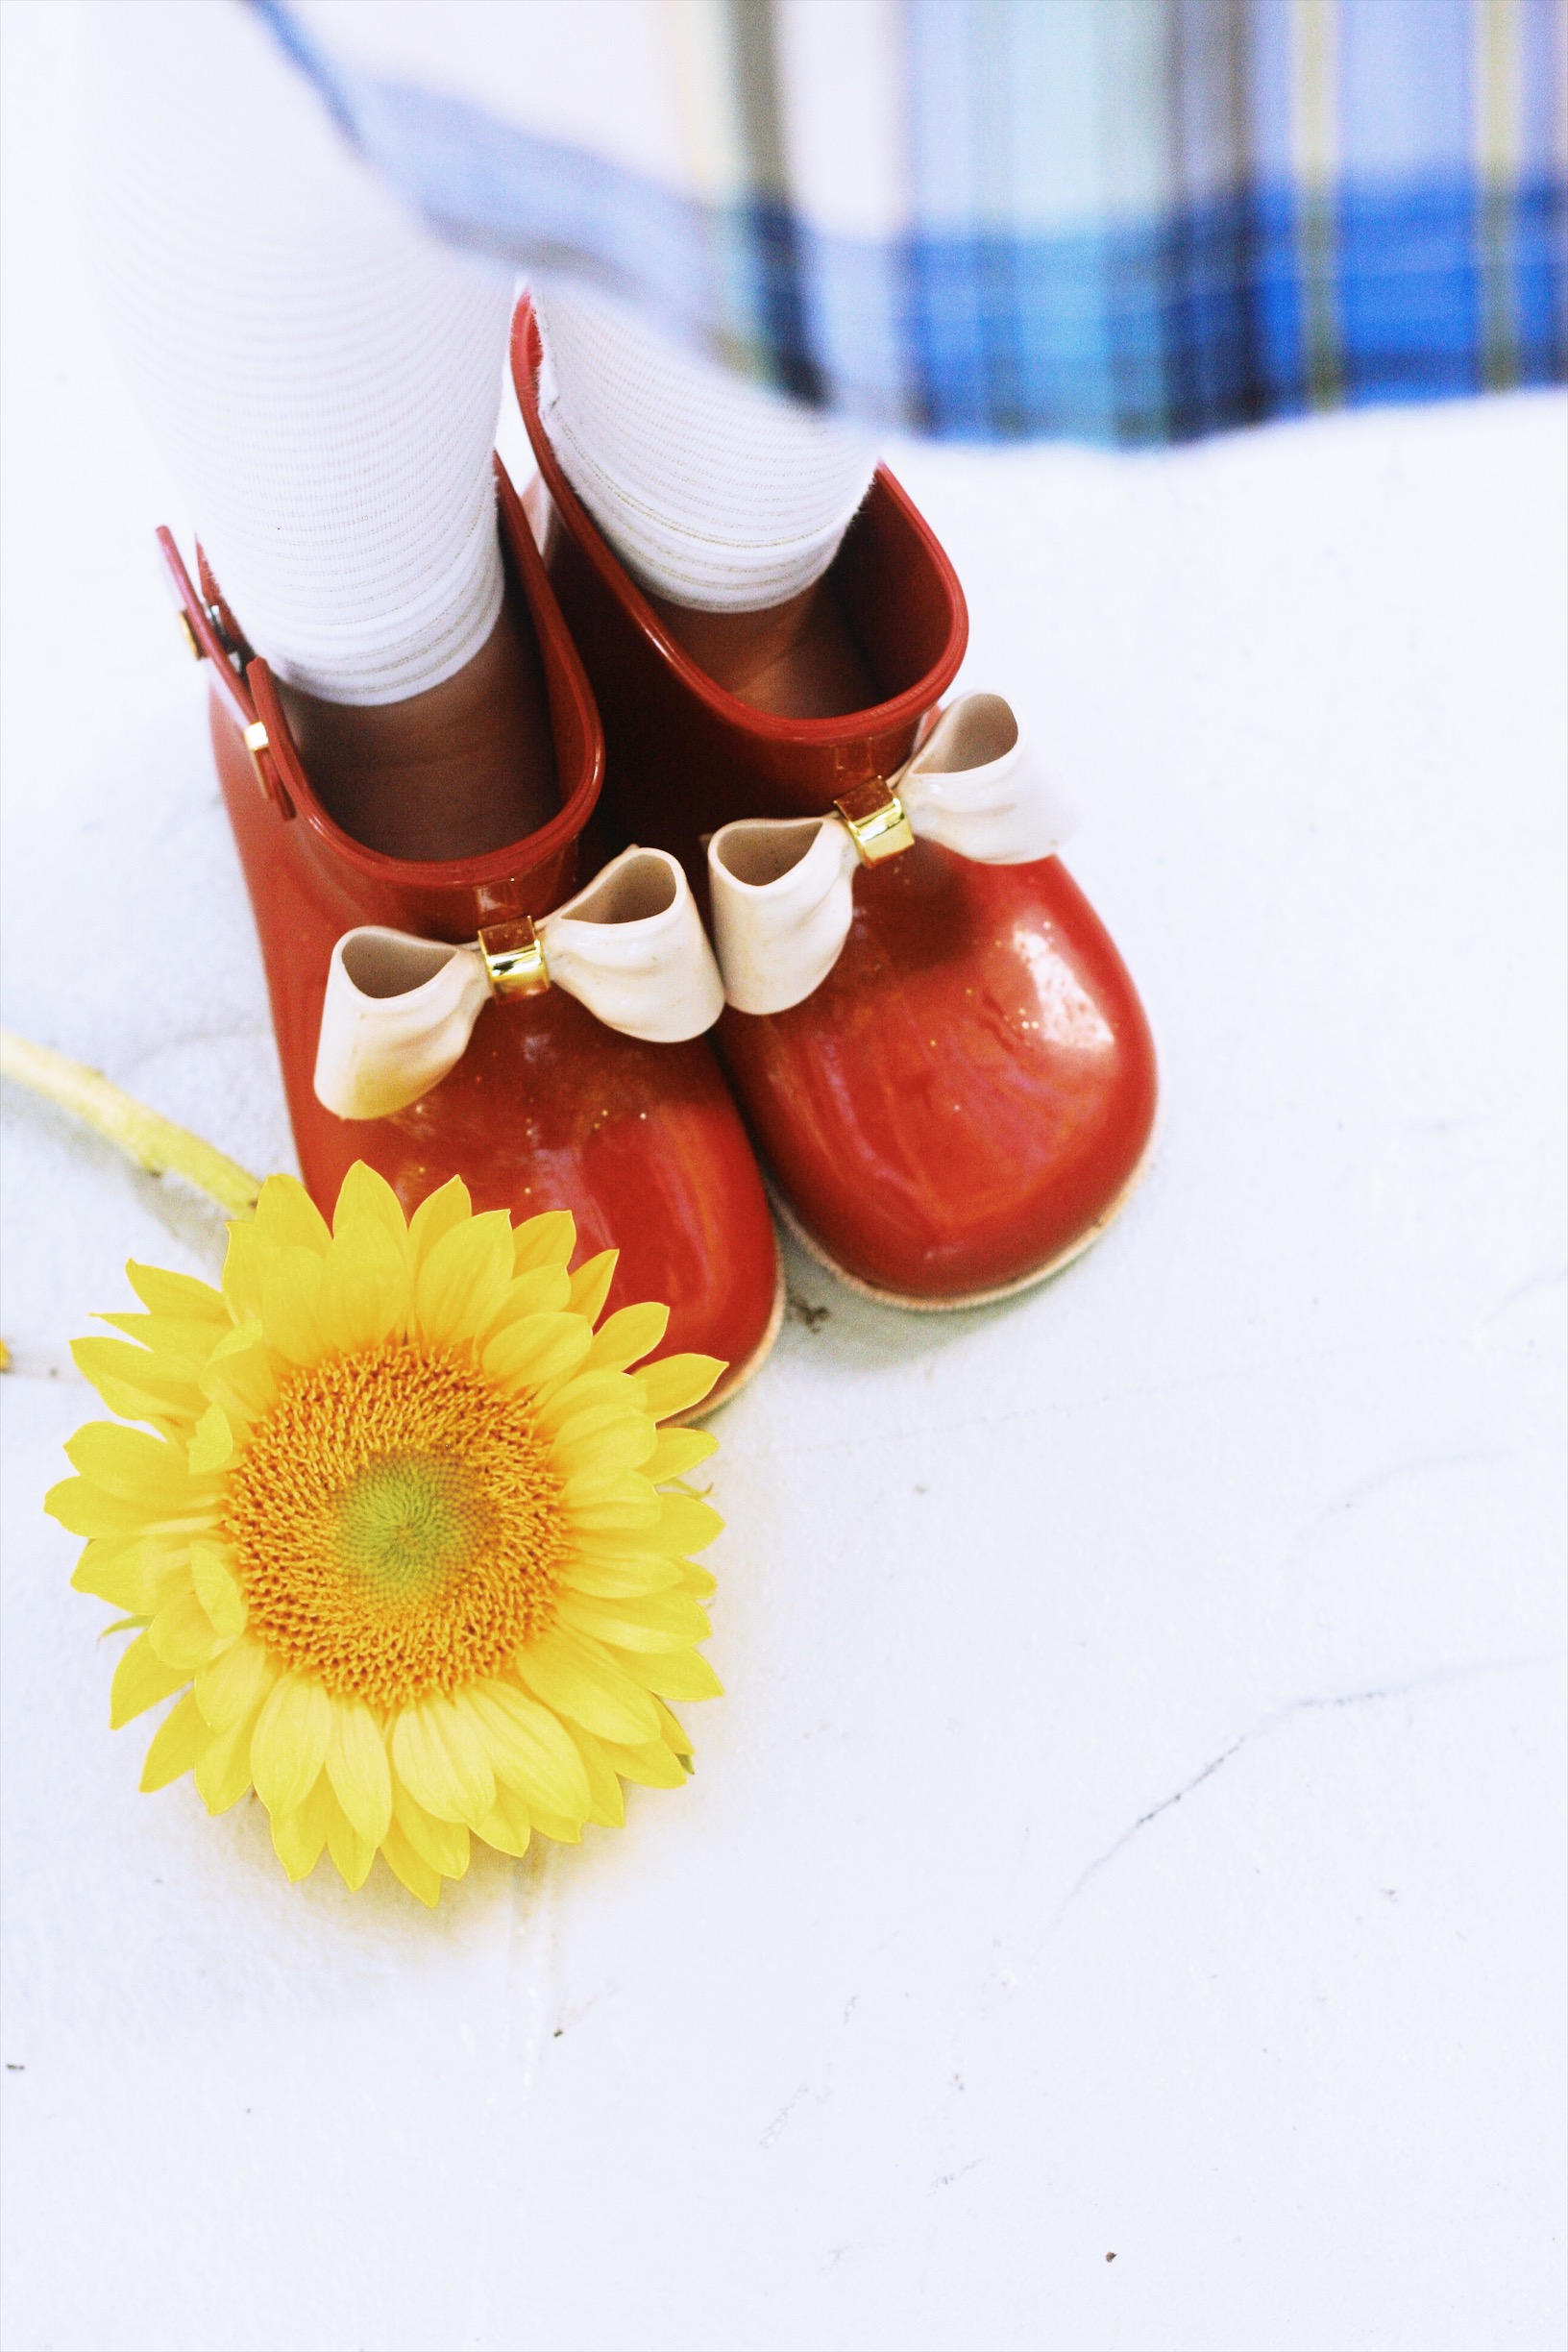 Nebraska Motherhood + Fashion blogger, Leslie of Tiny Stampede shares Fall Dresses toddler girls | Fresh looks on sale from Old Navy | Gap Kids | Nordstrom | Tea Collection | Mini Boden | Zara | Target